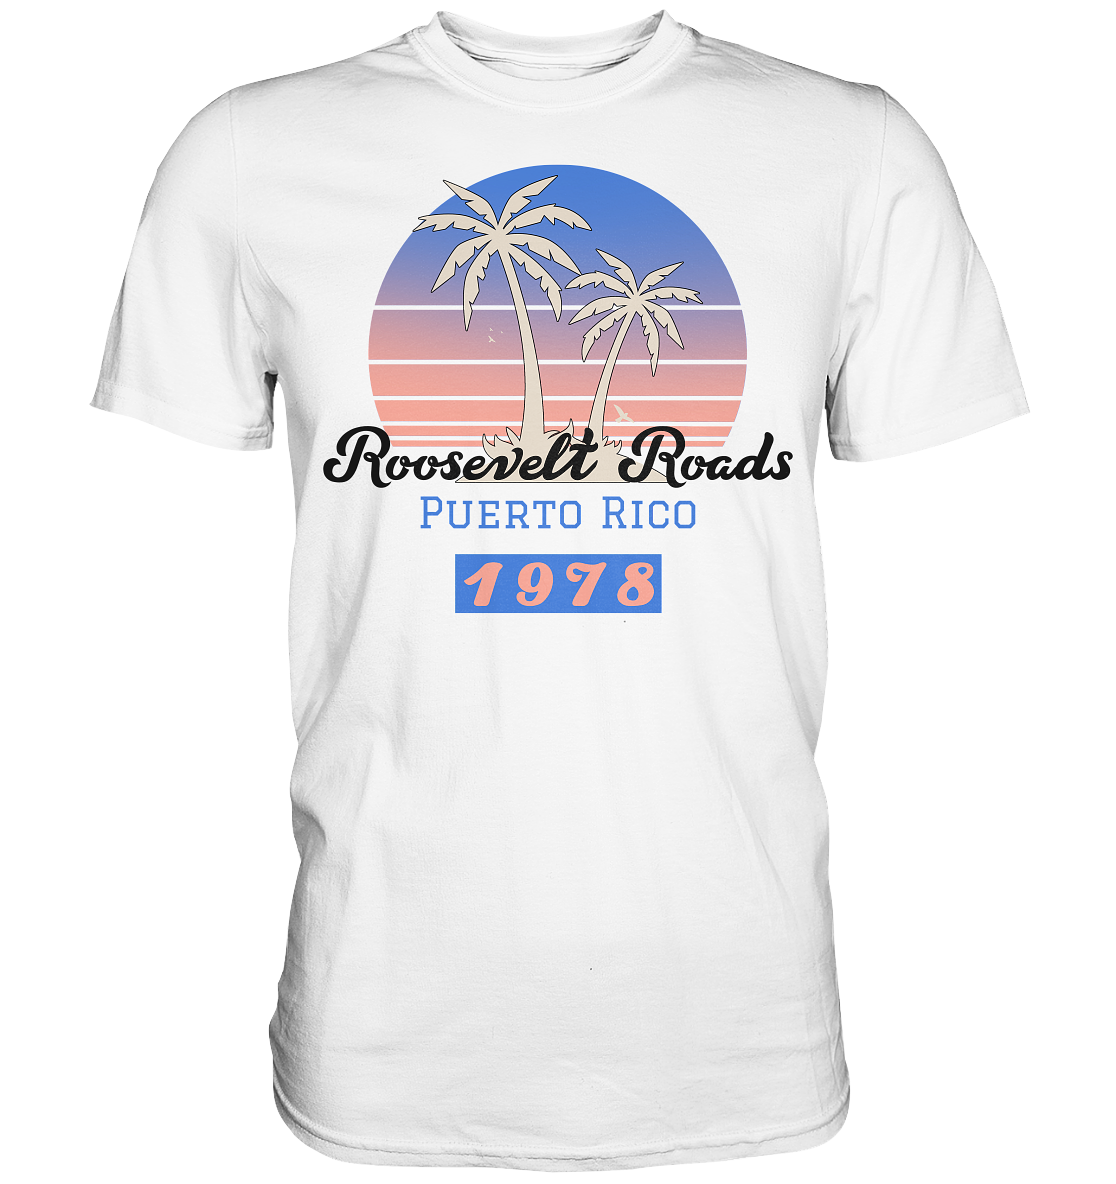 Roosevelt Roads - Premium Shirt